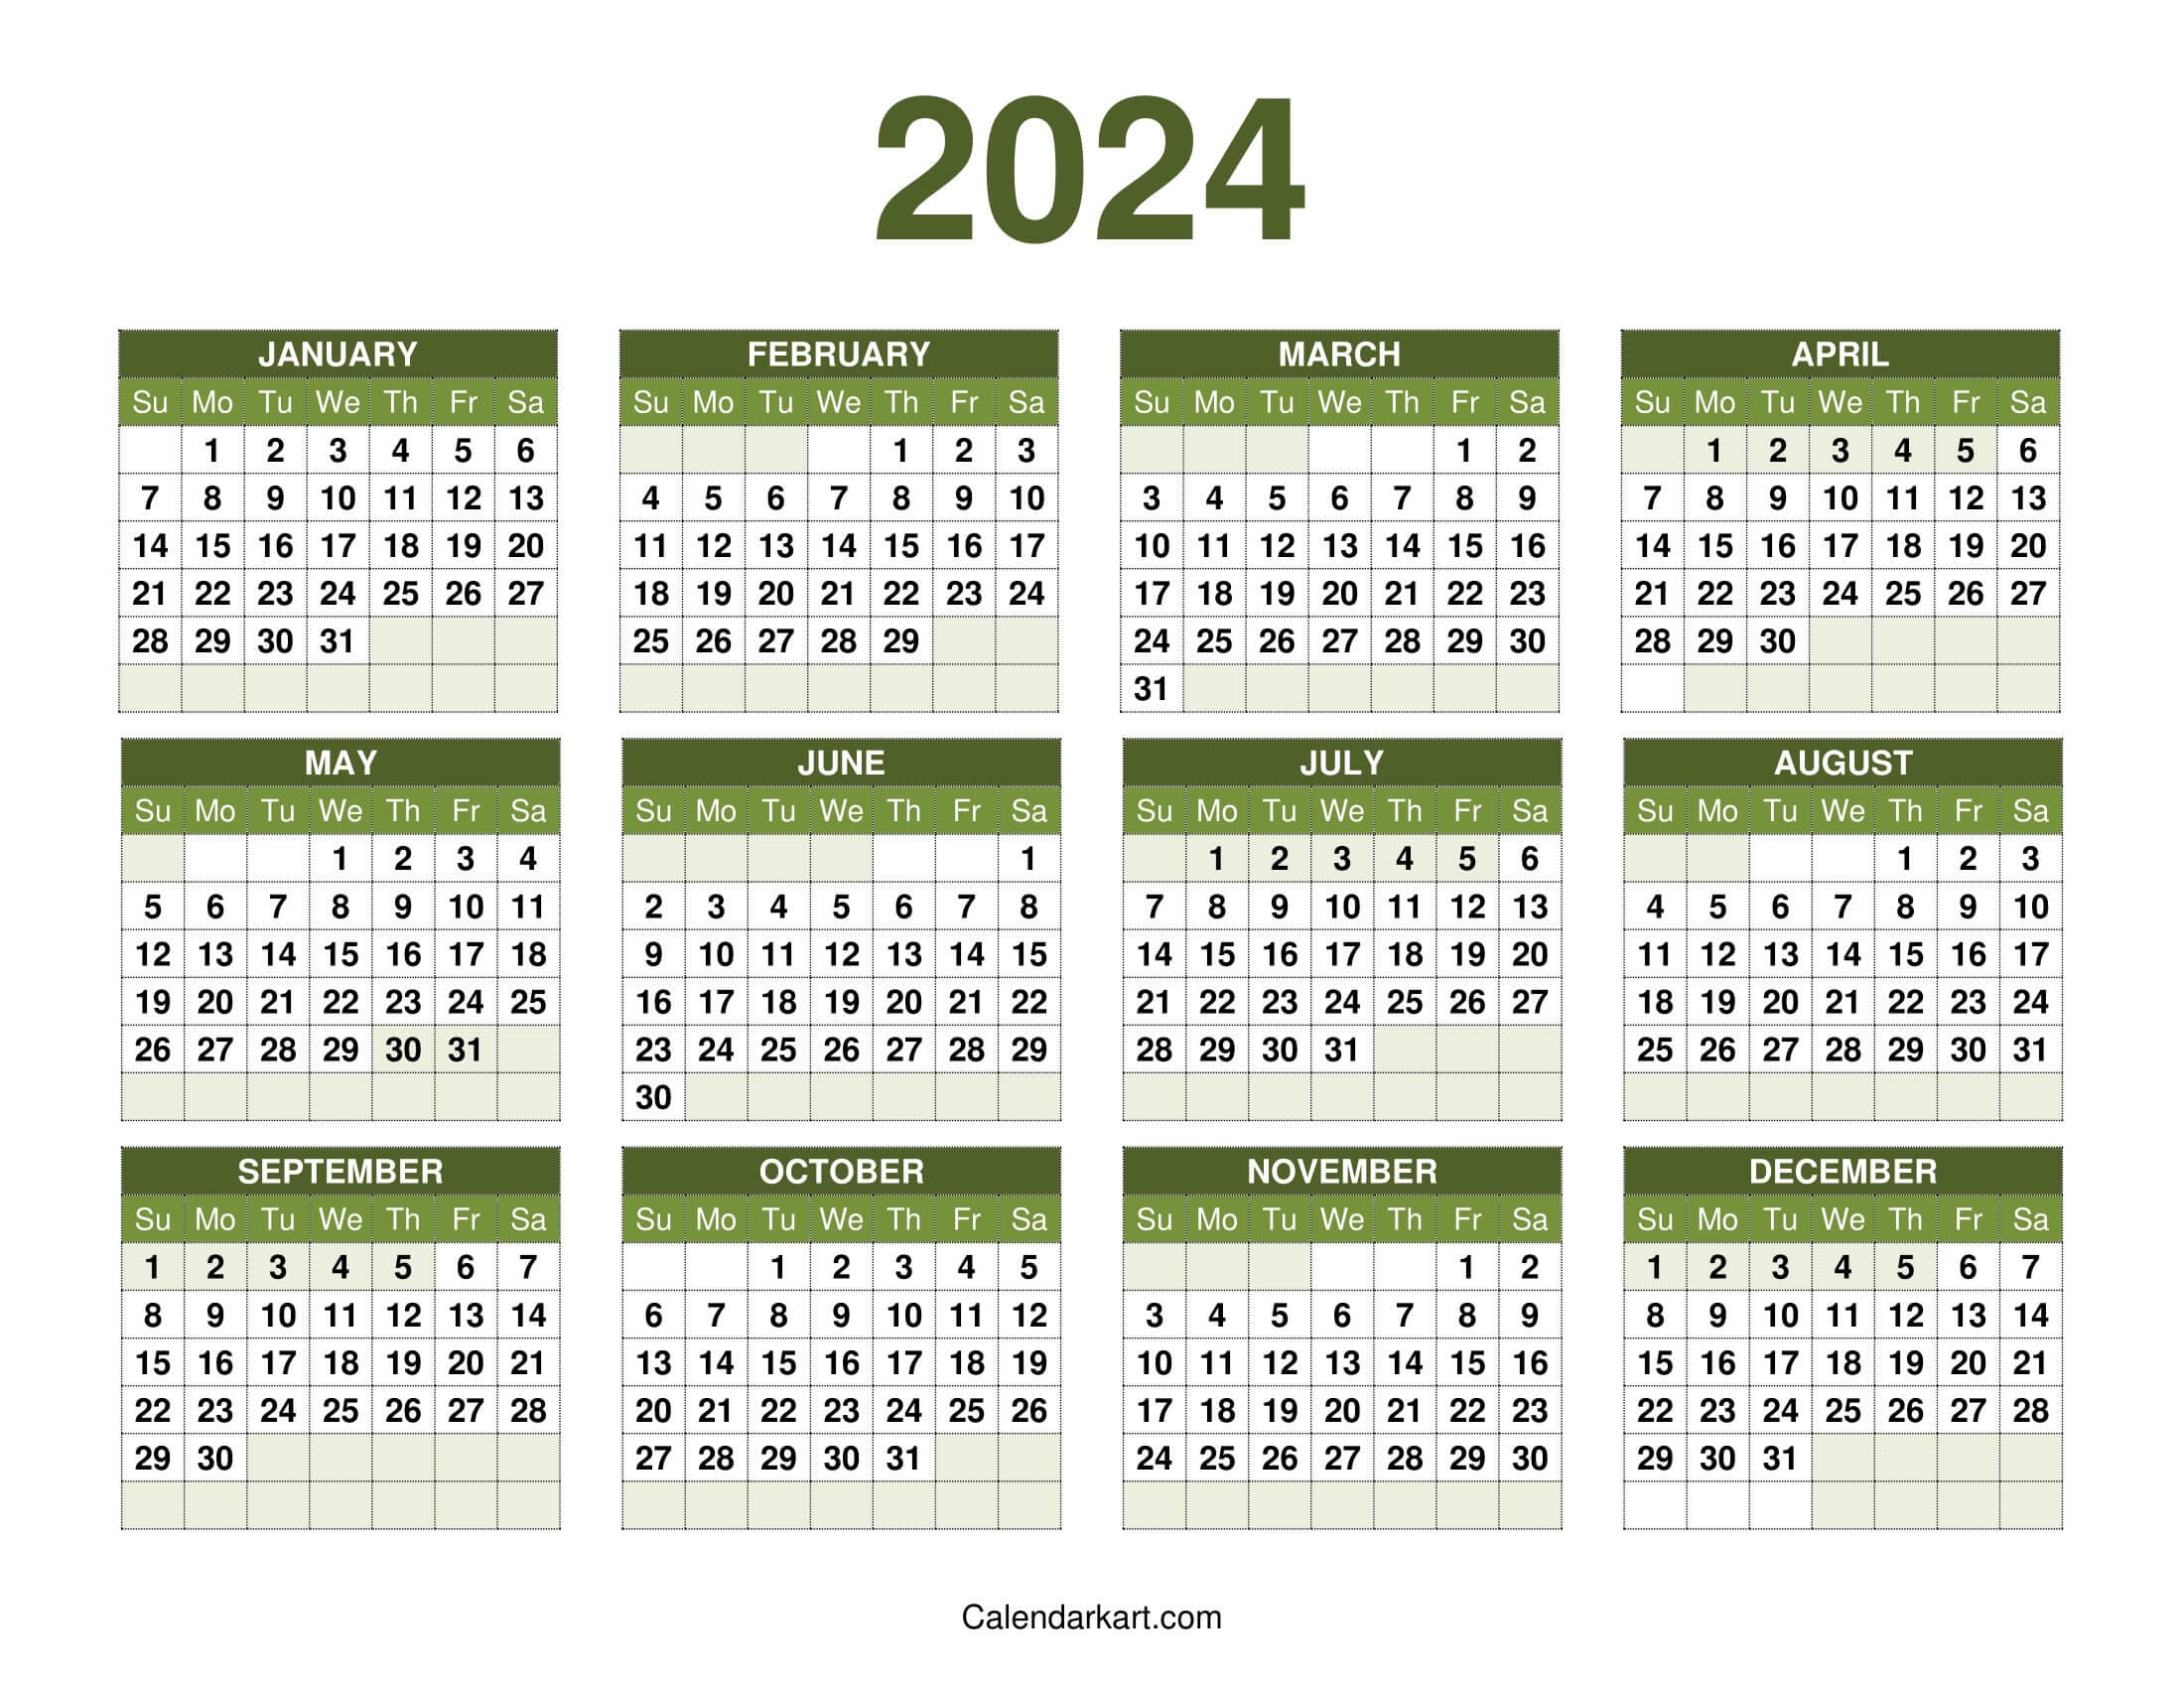 Download Printable Year At Glance Calendar 2024 | Calendarkart regarding Free Printable Calendar 2024 20